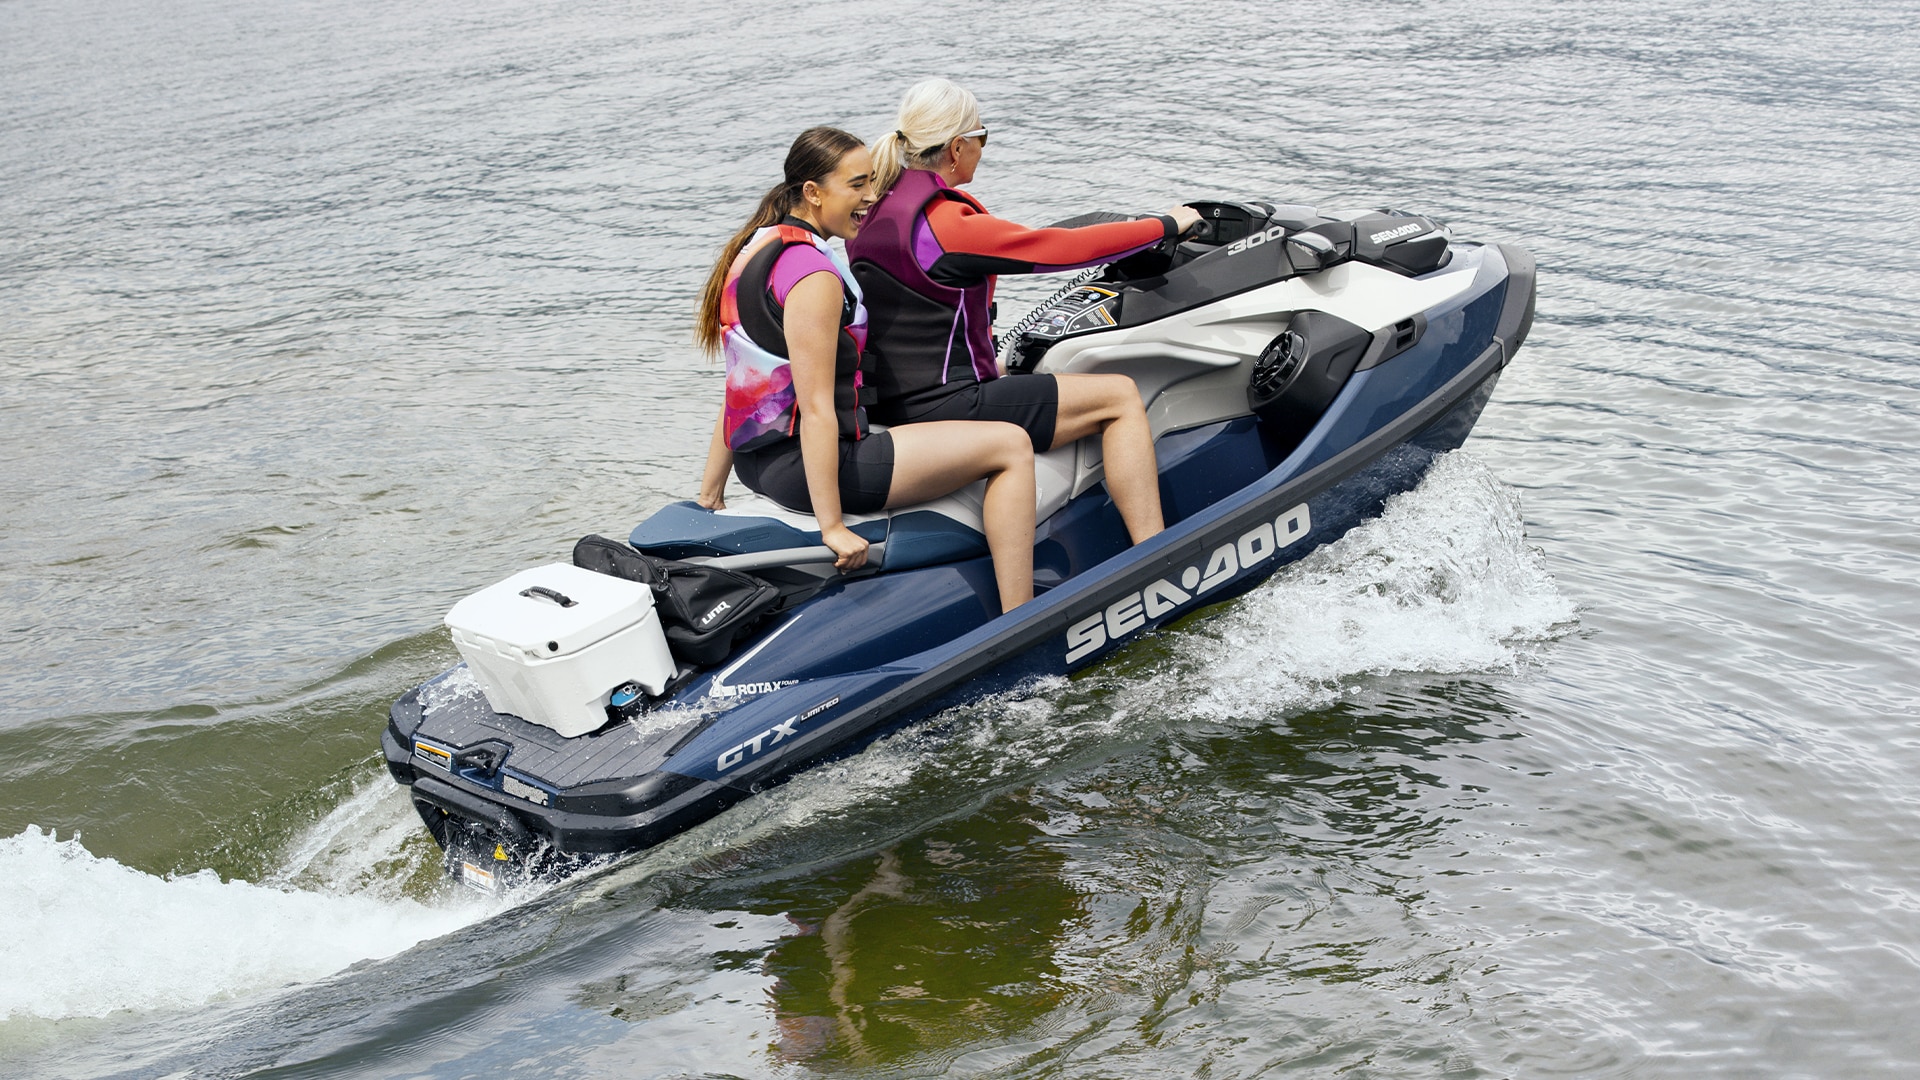 Two people ride one Sea-Doo watercraft